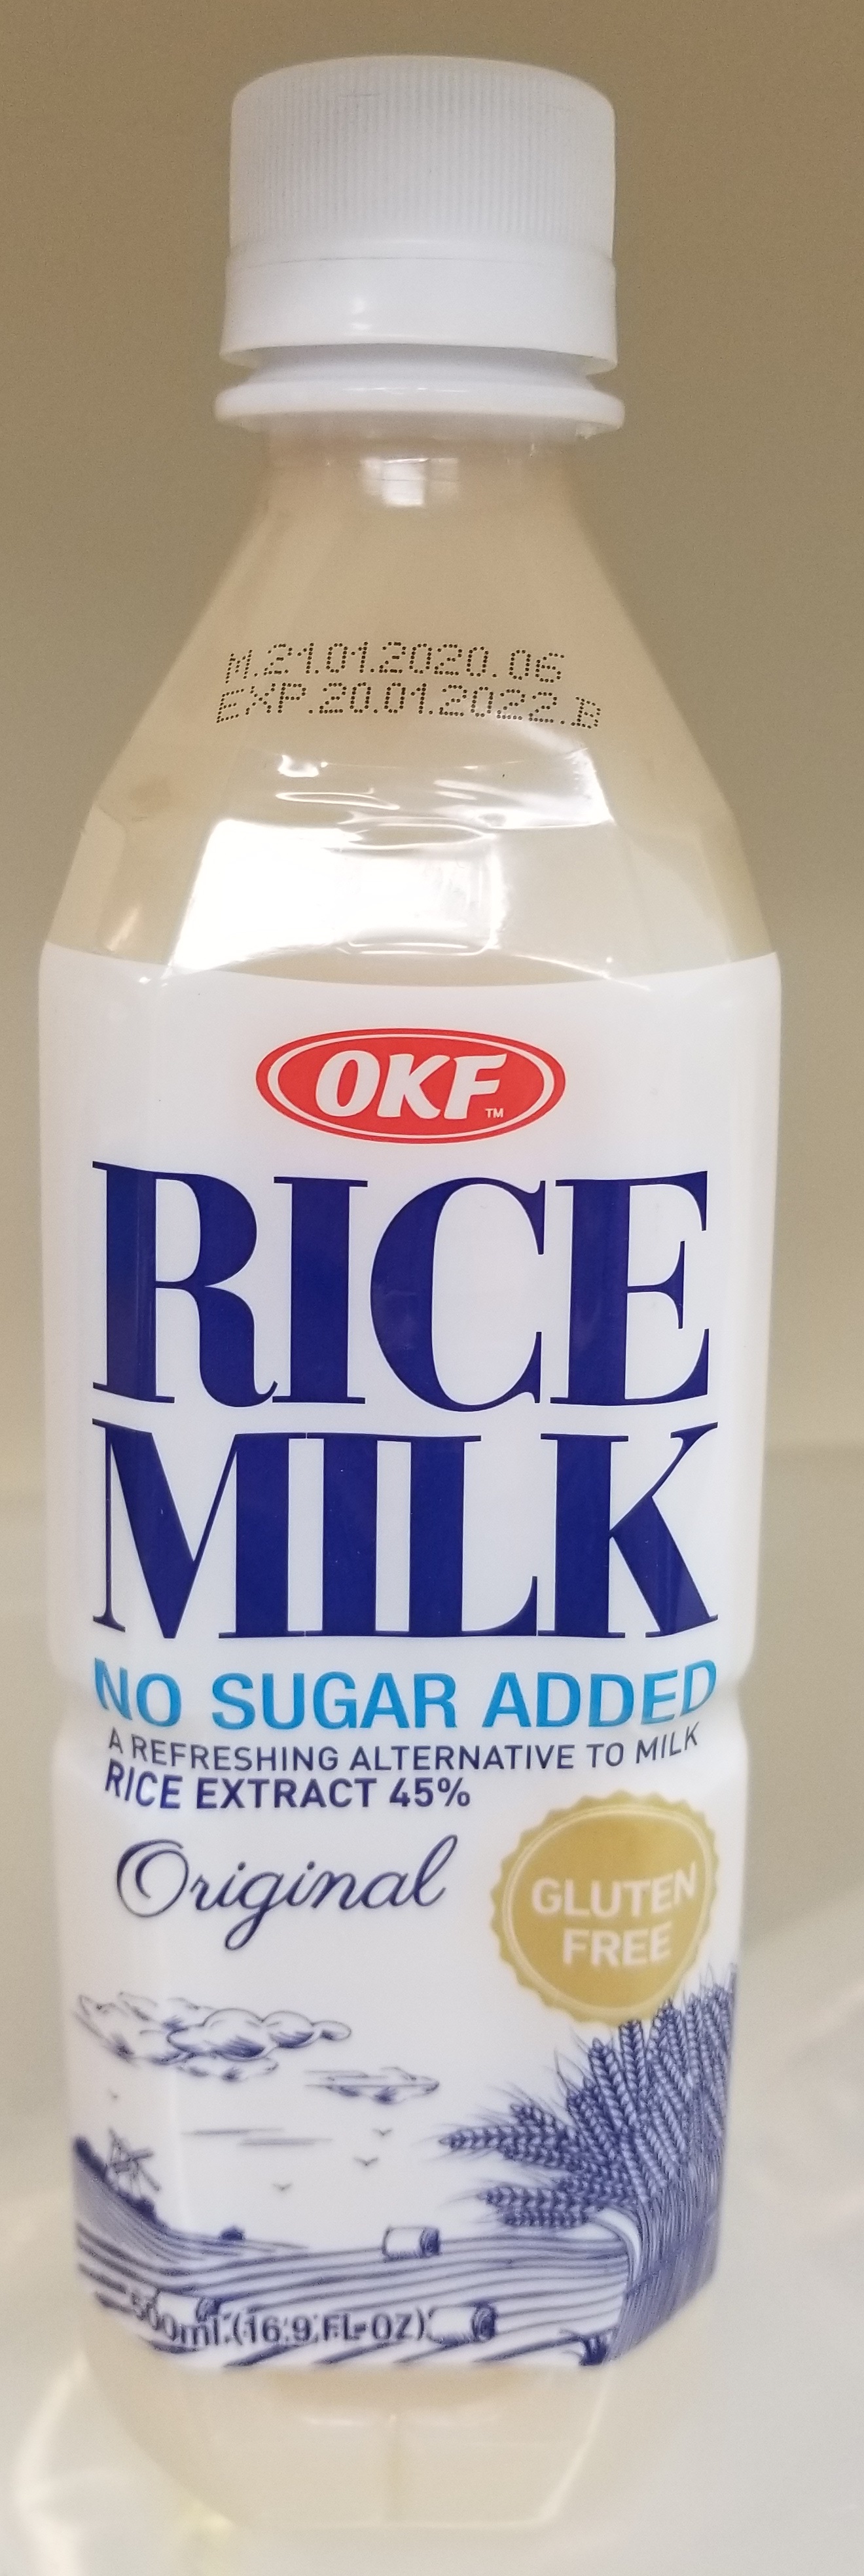 OKF - Rice Drink Original (code)